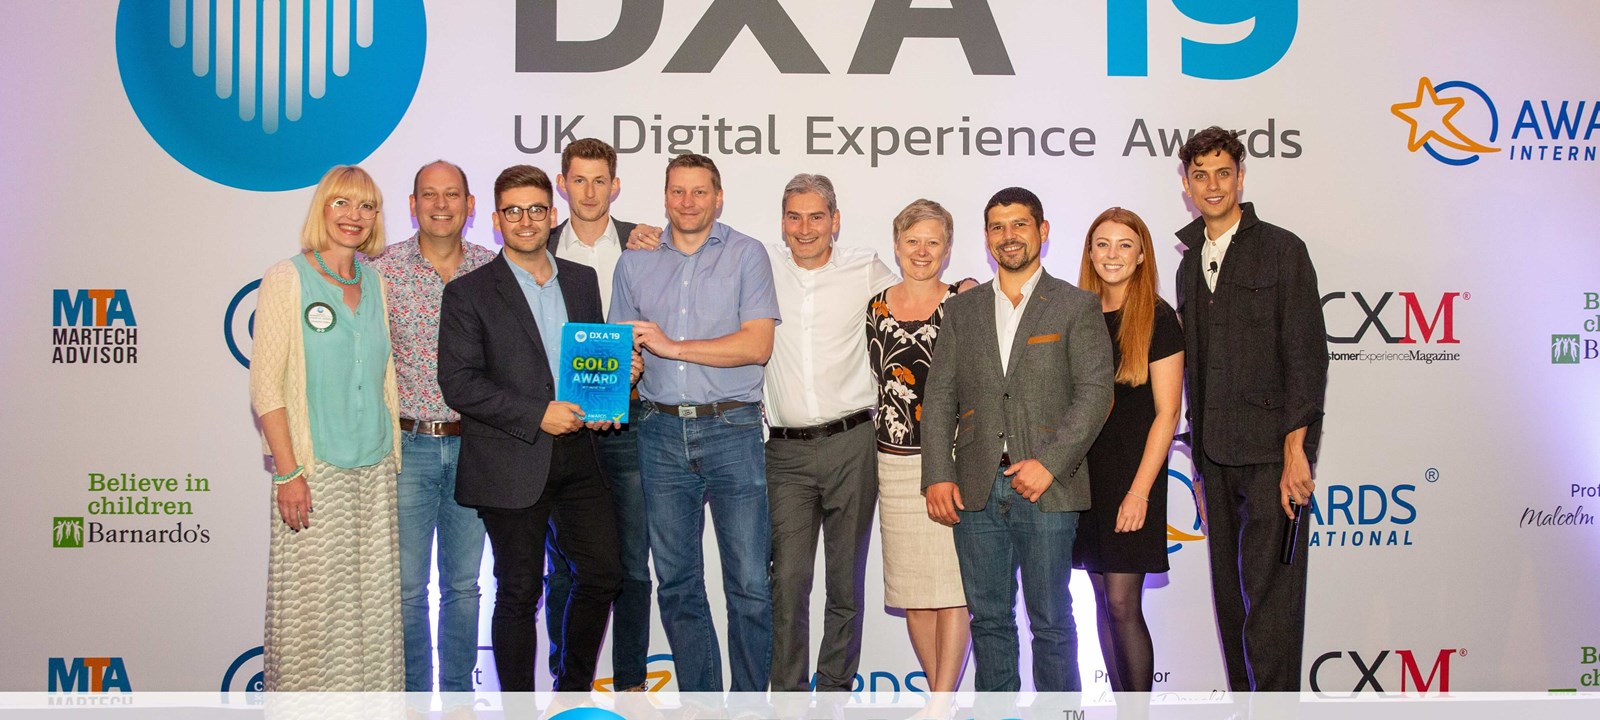 The Blue Badge Digital Service has won three awards at the UK Digital Experience Awards 2019